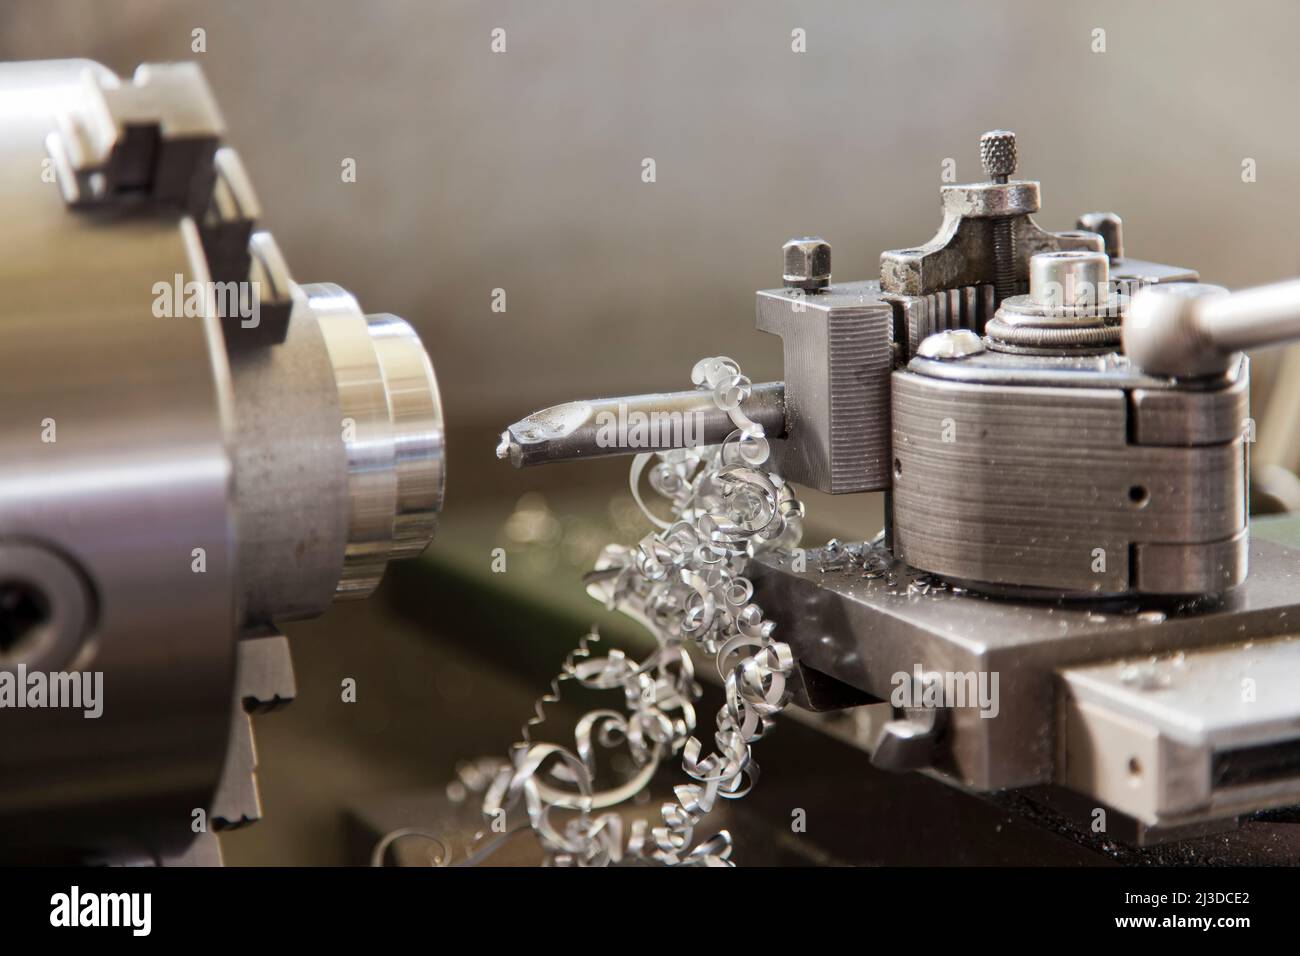 cnc metal milling machine at work Stock Photo